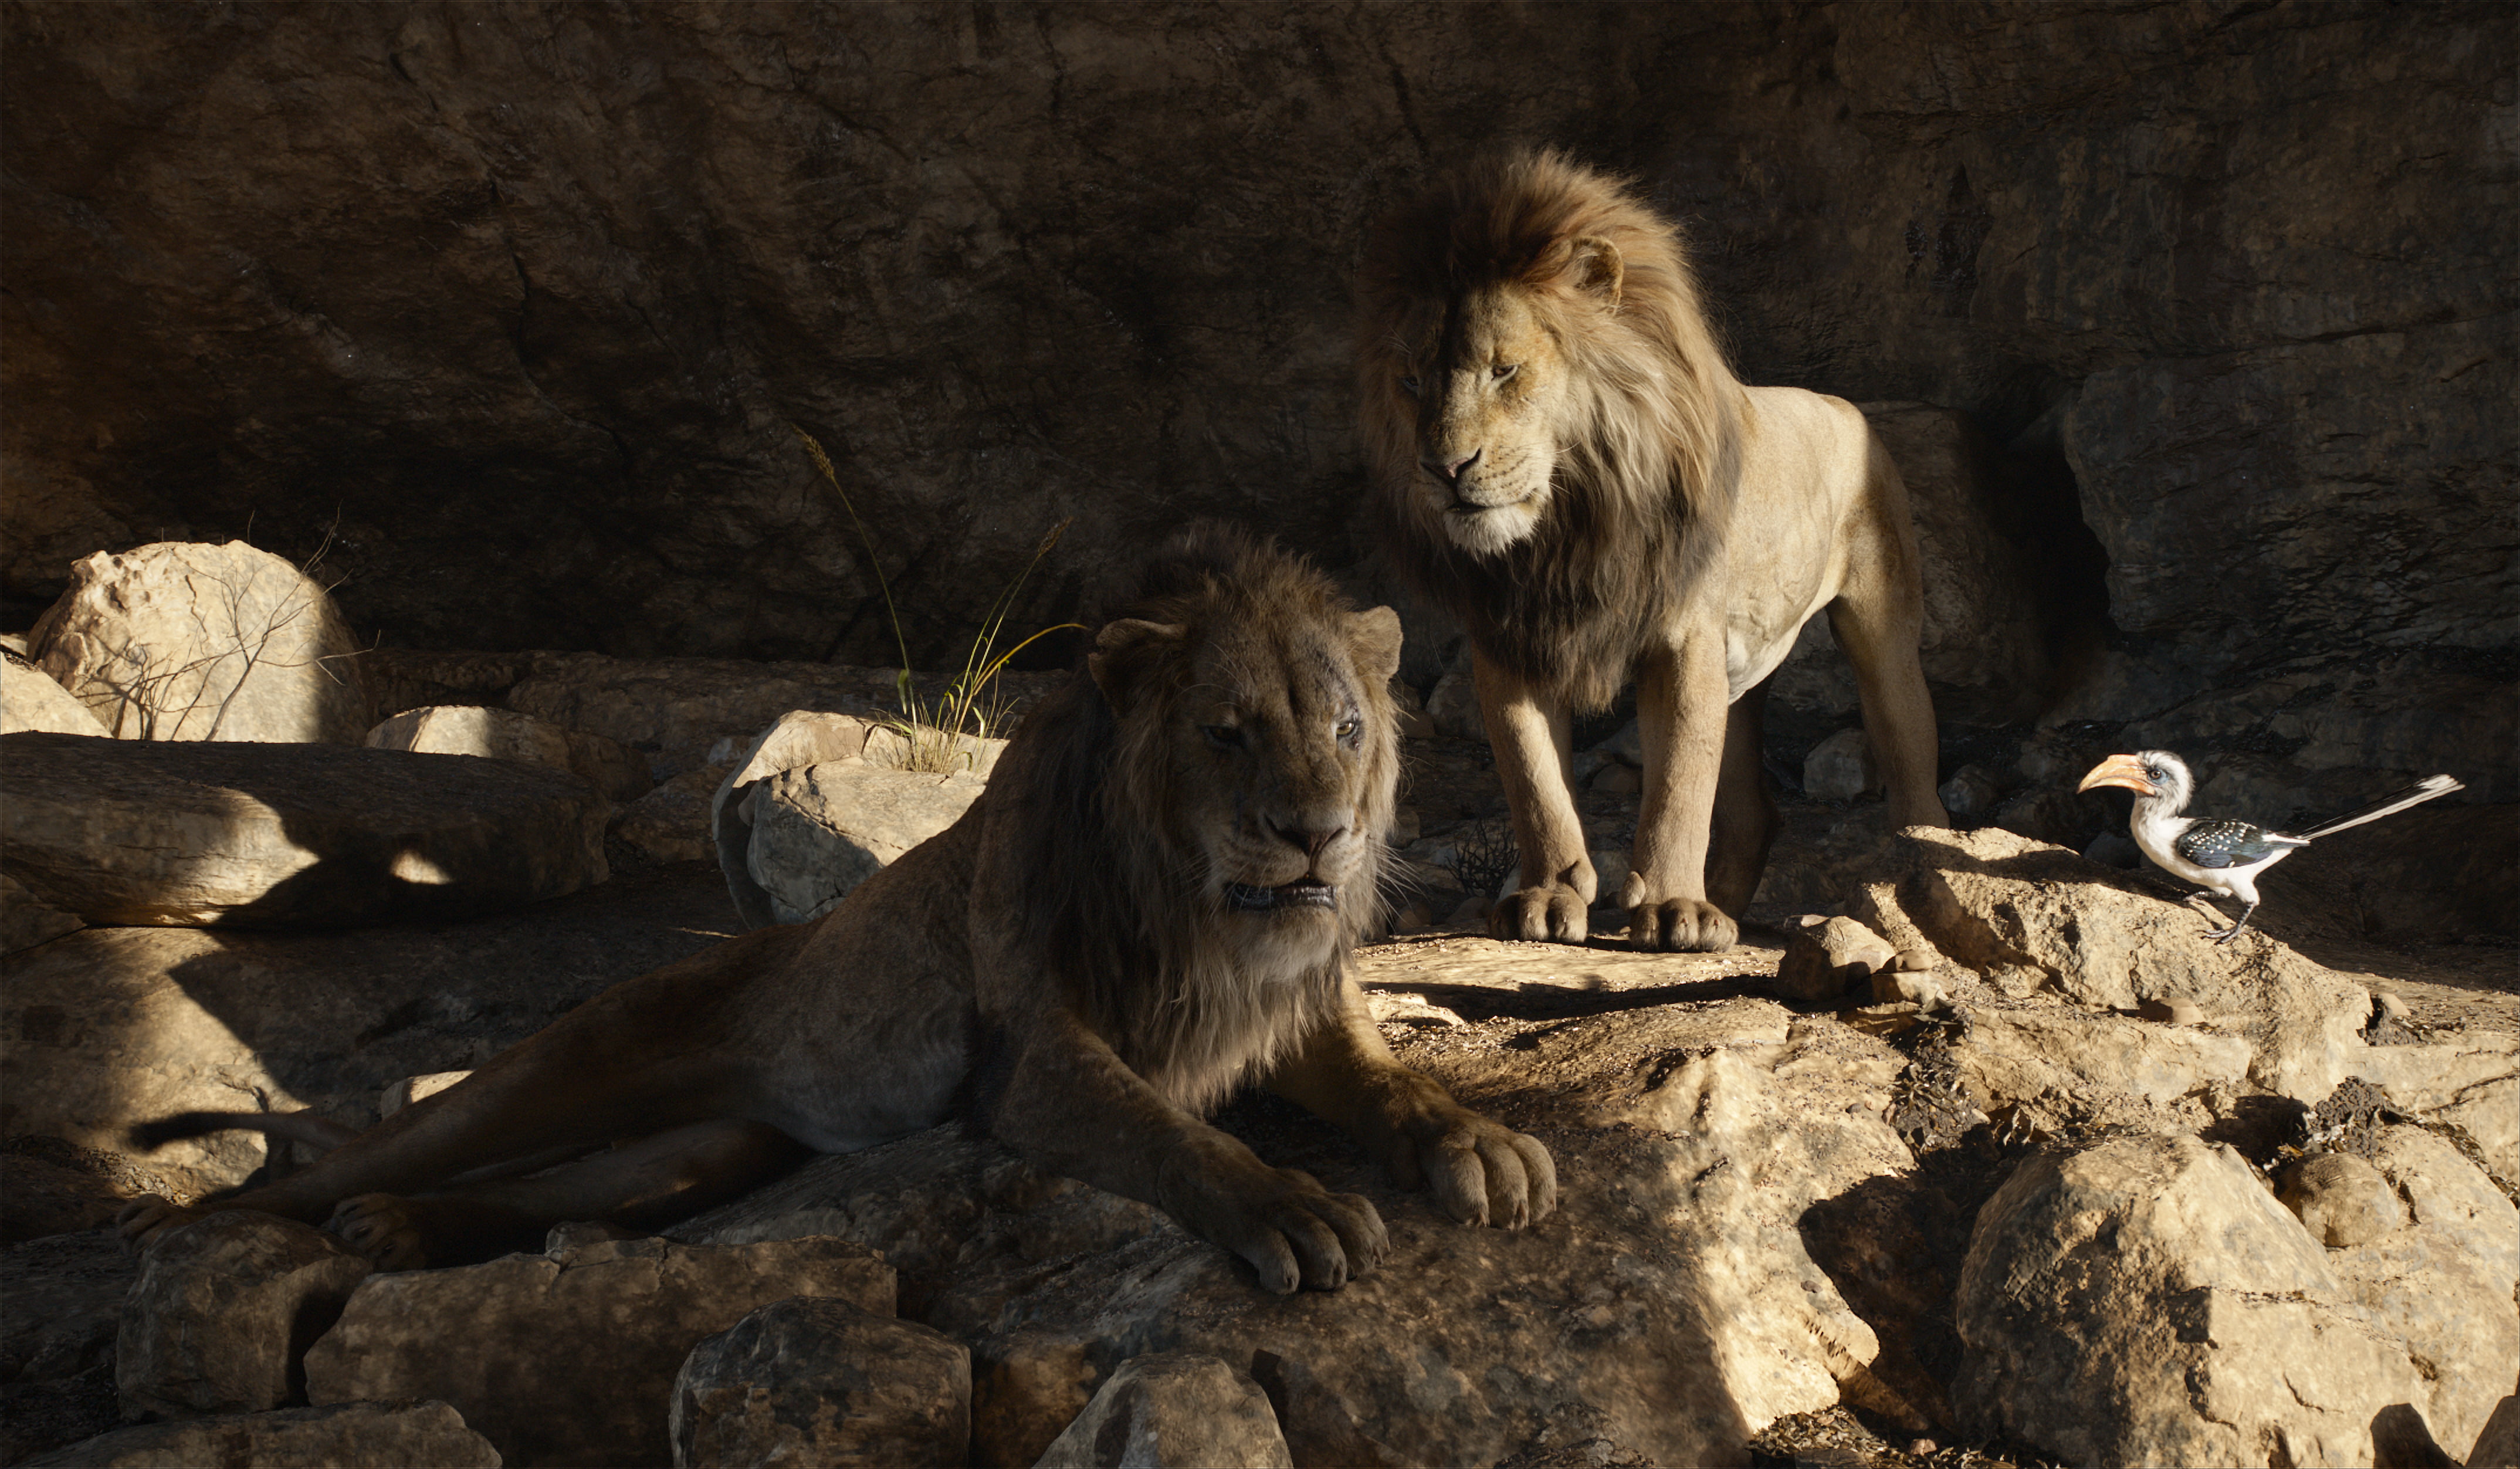 Movie, The Lion King (2019), Mufasa (The Lion King), Simba